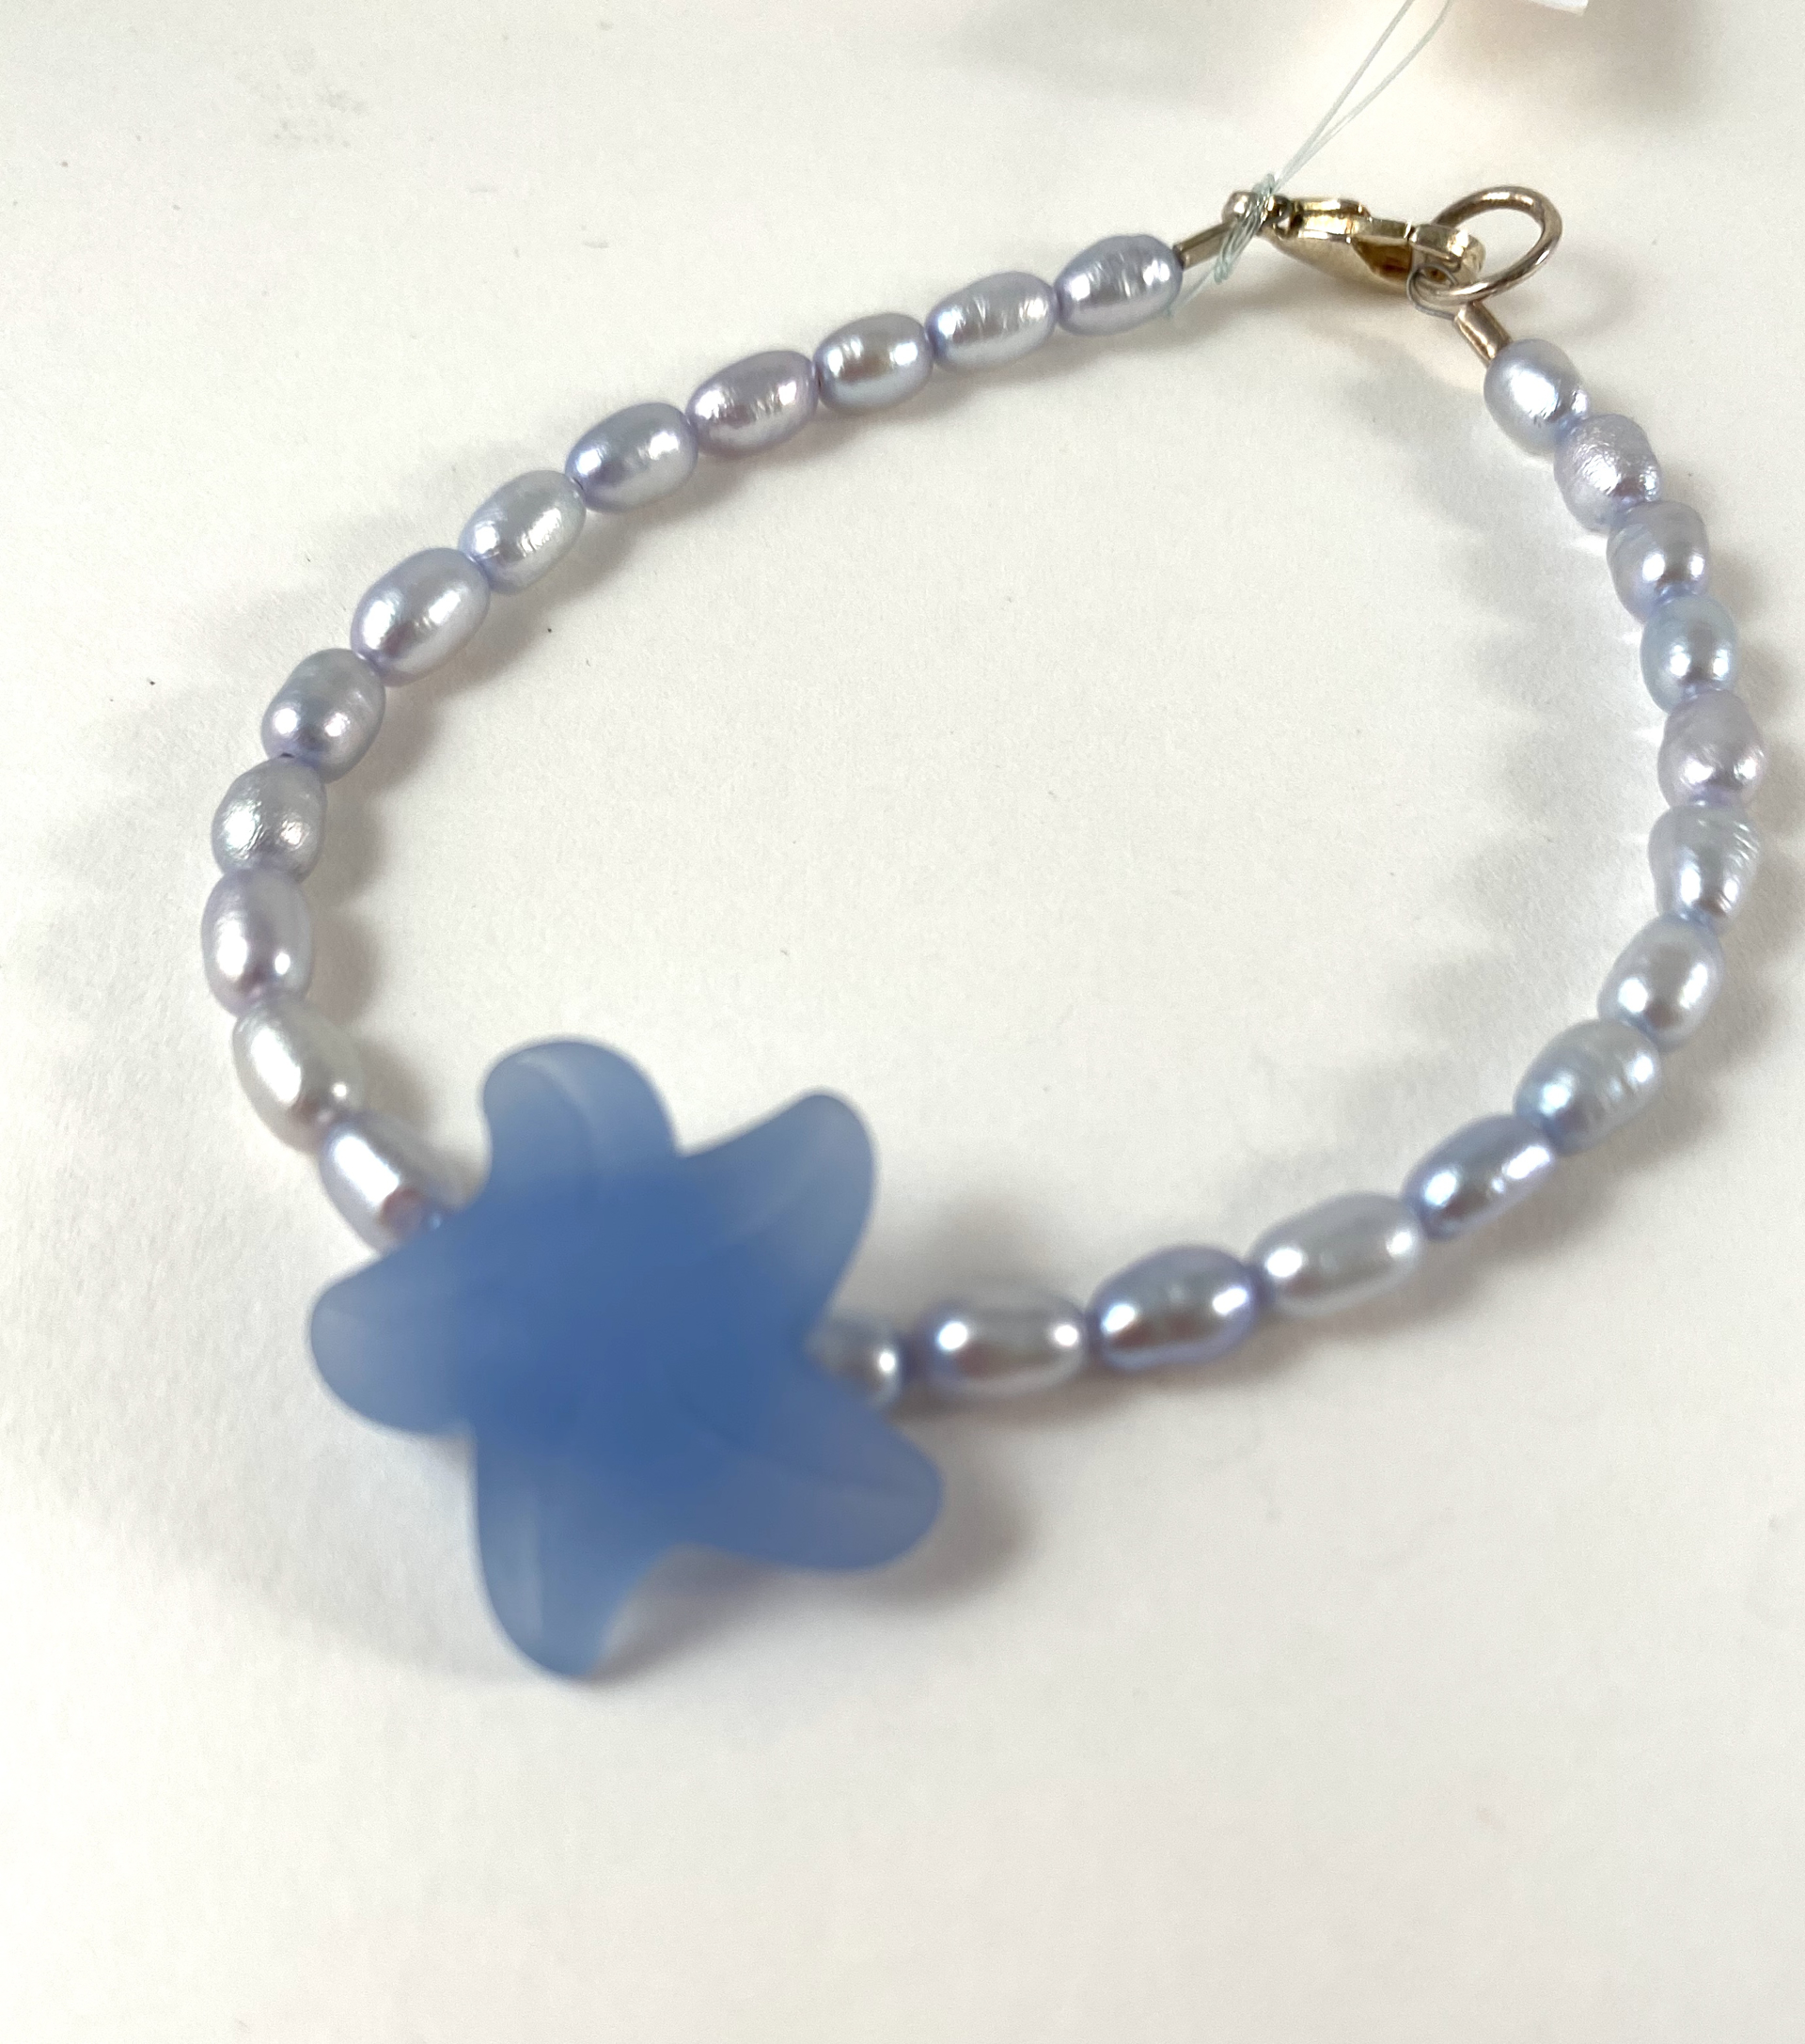 Grey Pearl Bracelet, blue cultured seaglass charm P20 by Nance Trueworthy